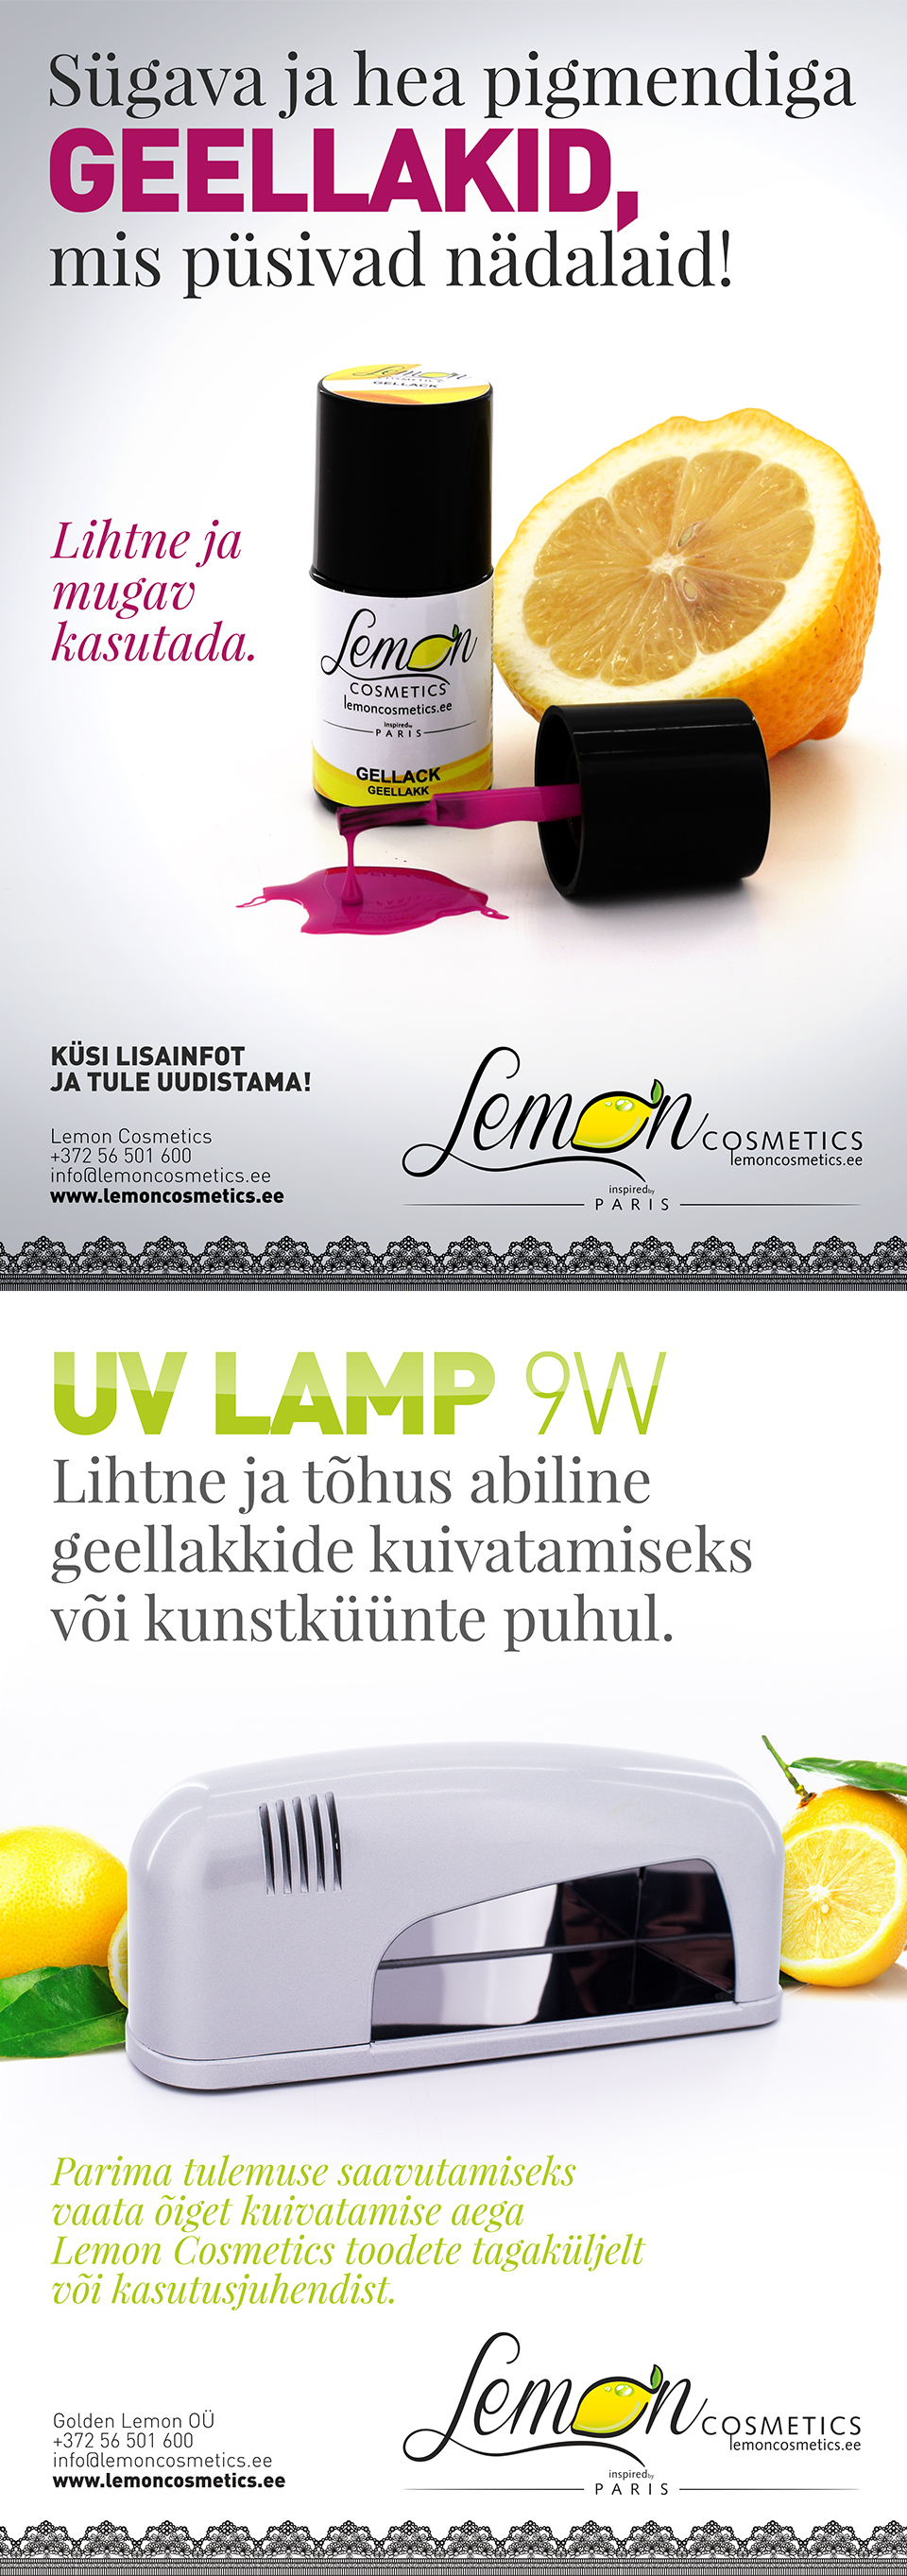 Lemoncosmetics-poster-1